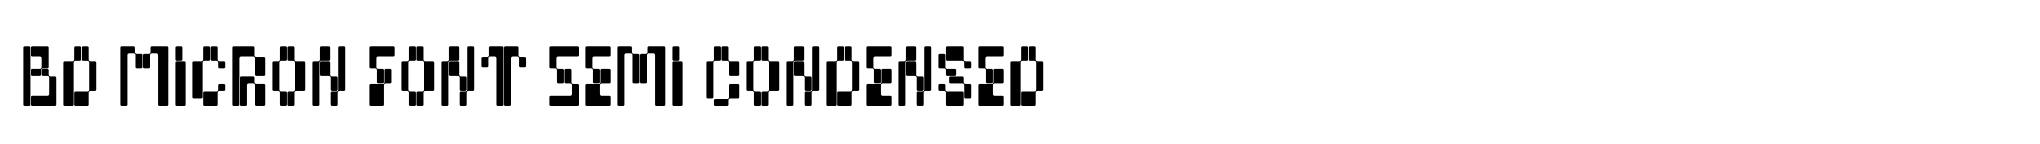 BD Micron Font Semi Condensed image